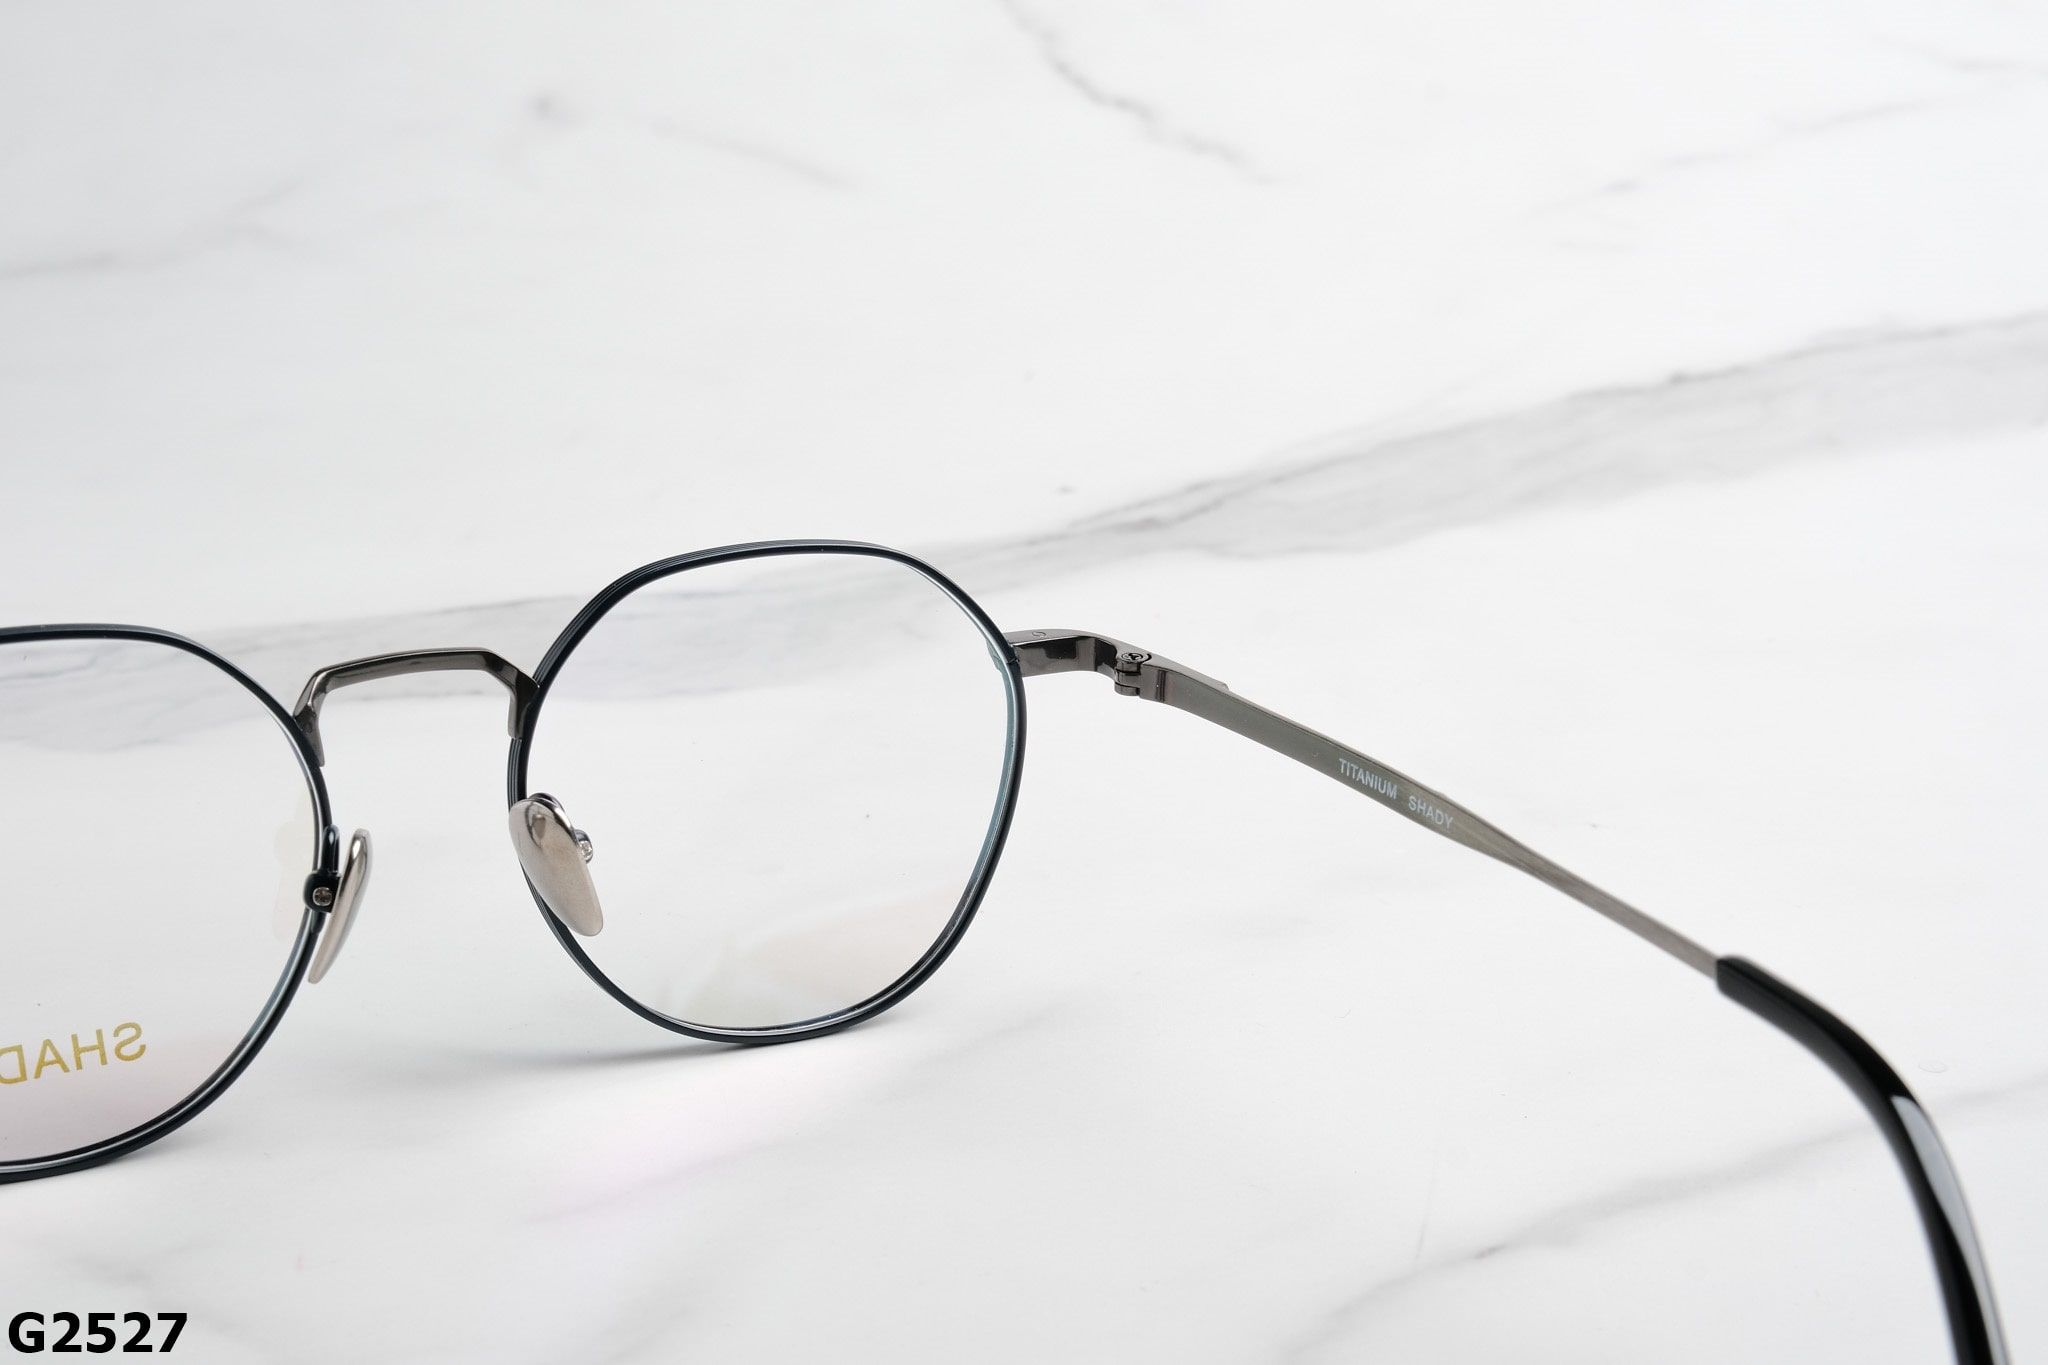  SHADY Eyewear - Glasses - G2527 